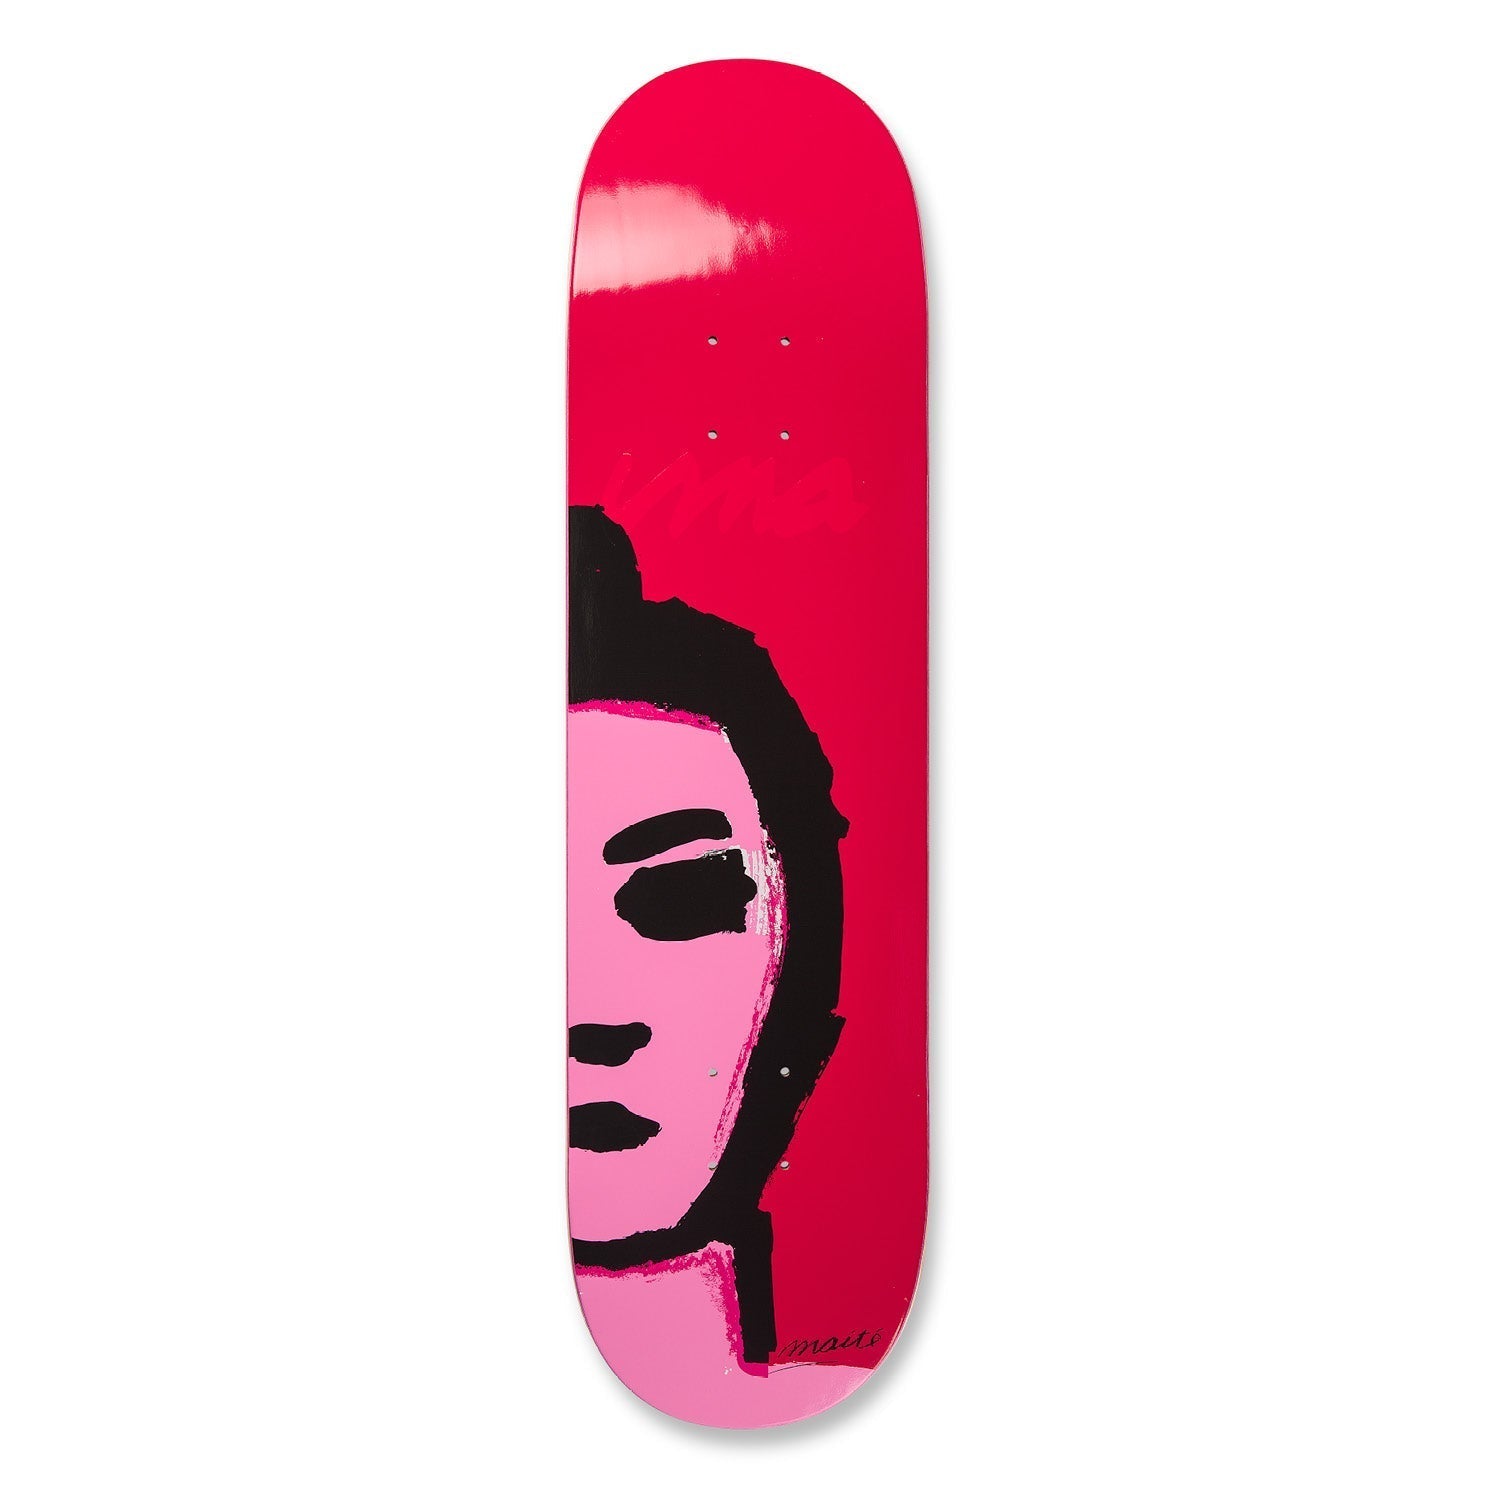 UMA 'Pink Lady' 8.25" skateboard deck - SkatebruhSG